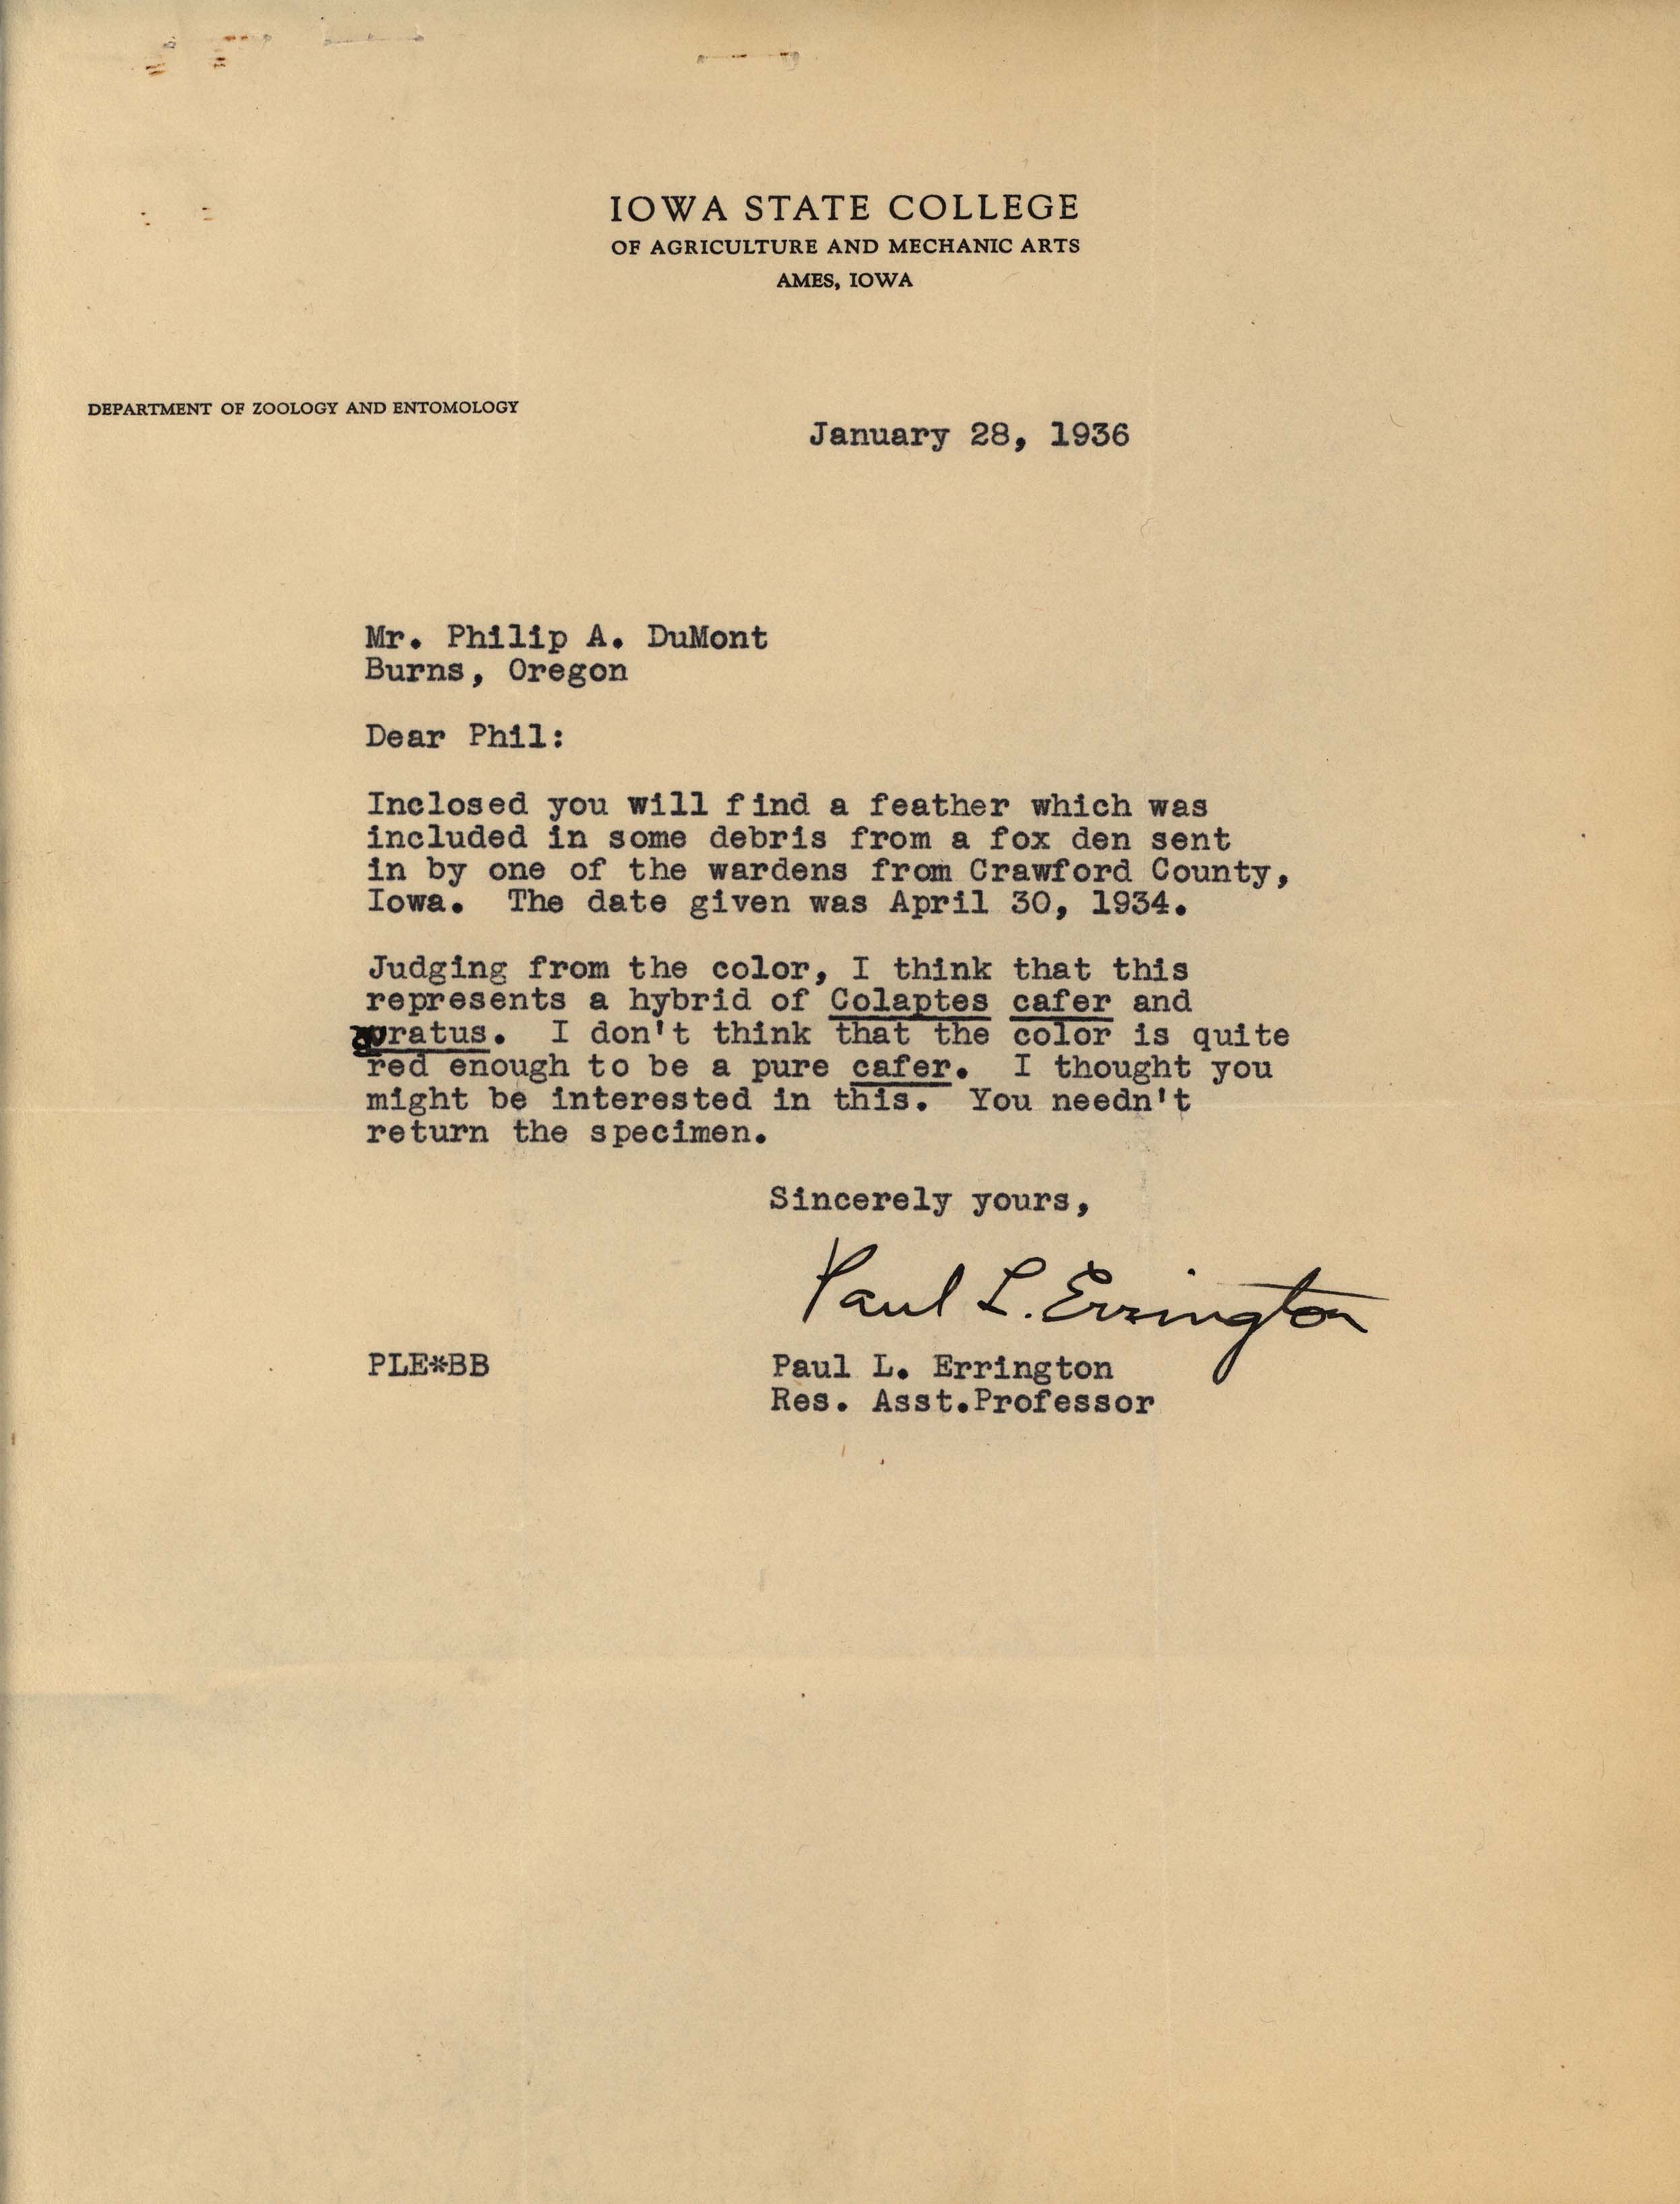 Paul Errington letter to Philip DuMont regarding feather identification, January 28, 1936